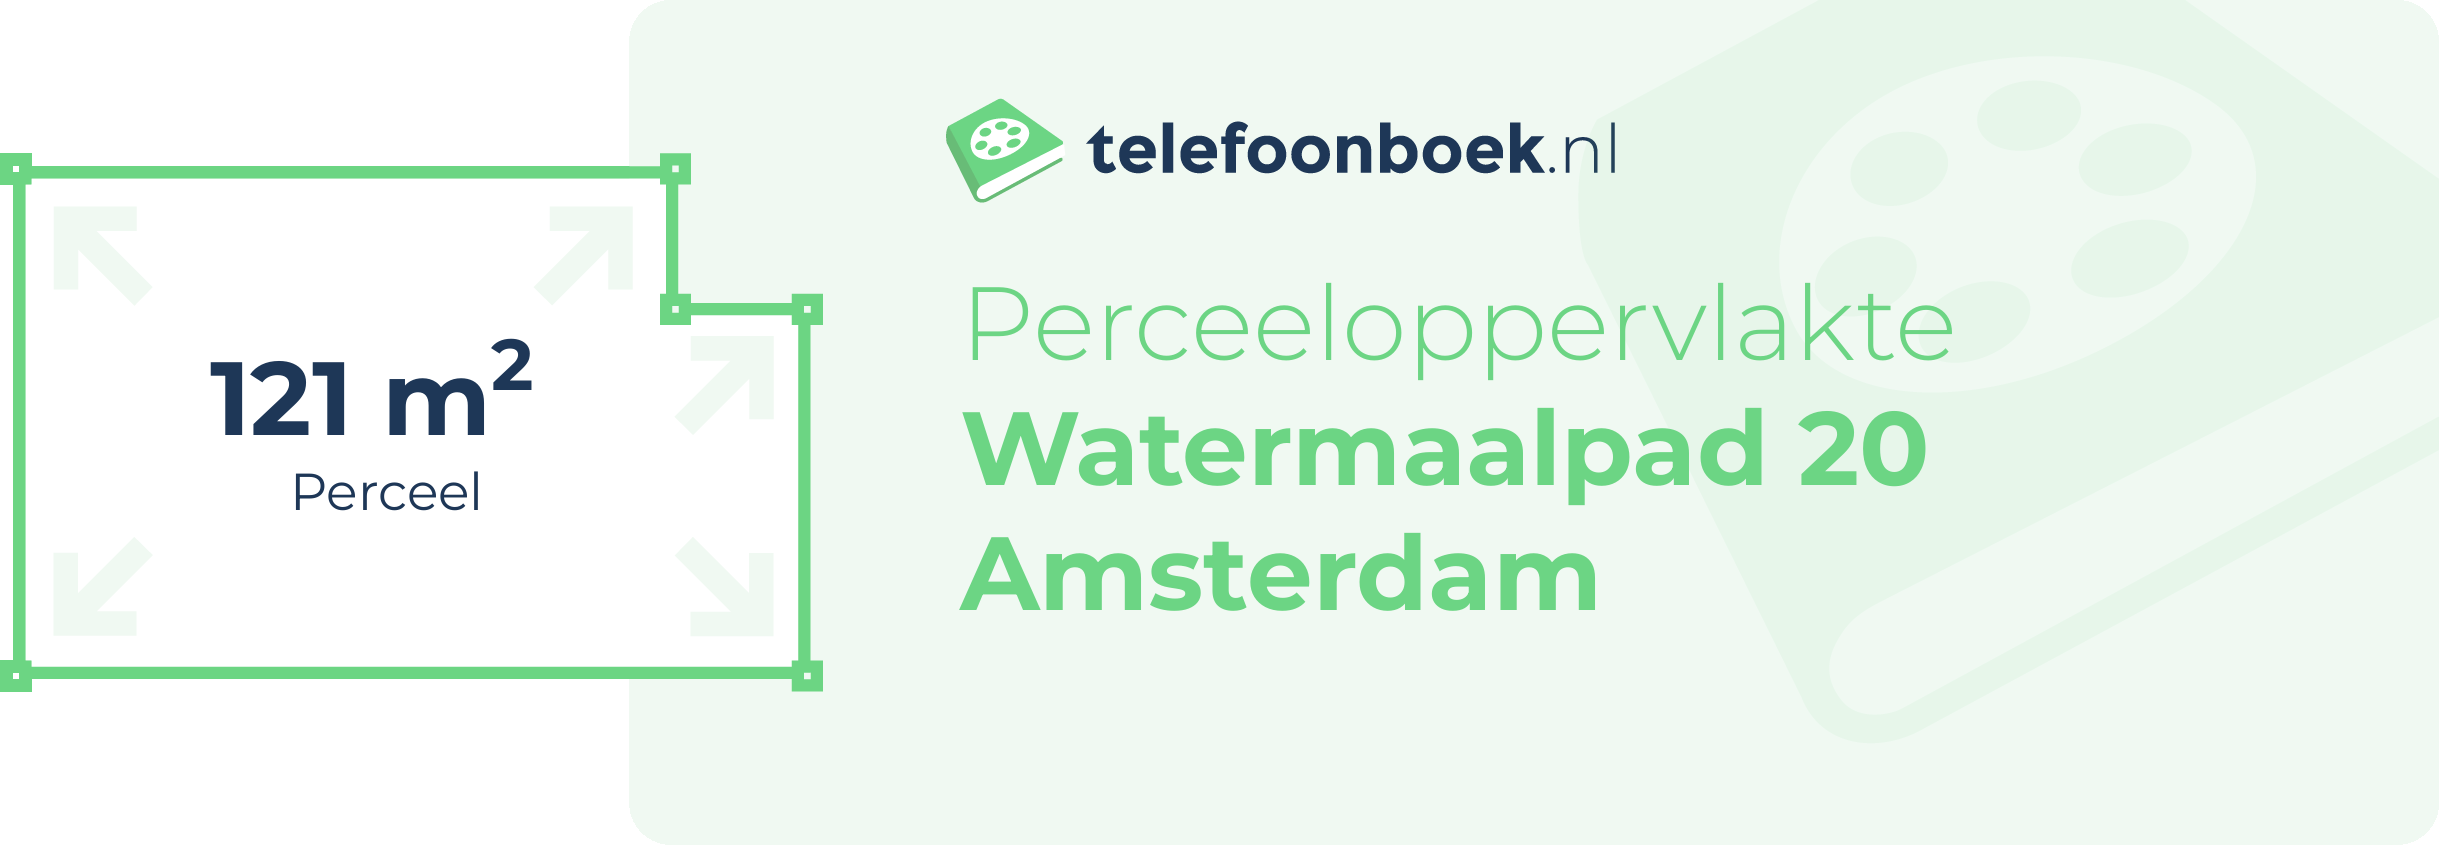 Perceeloppervlakte Watermaalpad 20 Amsterdam